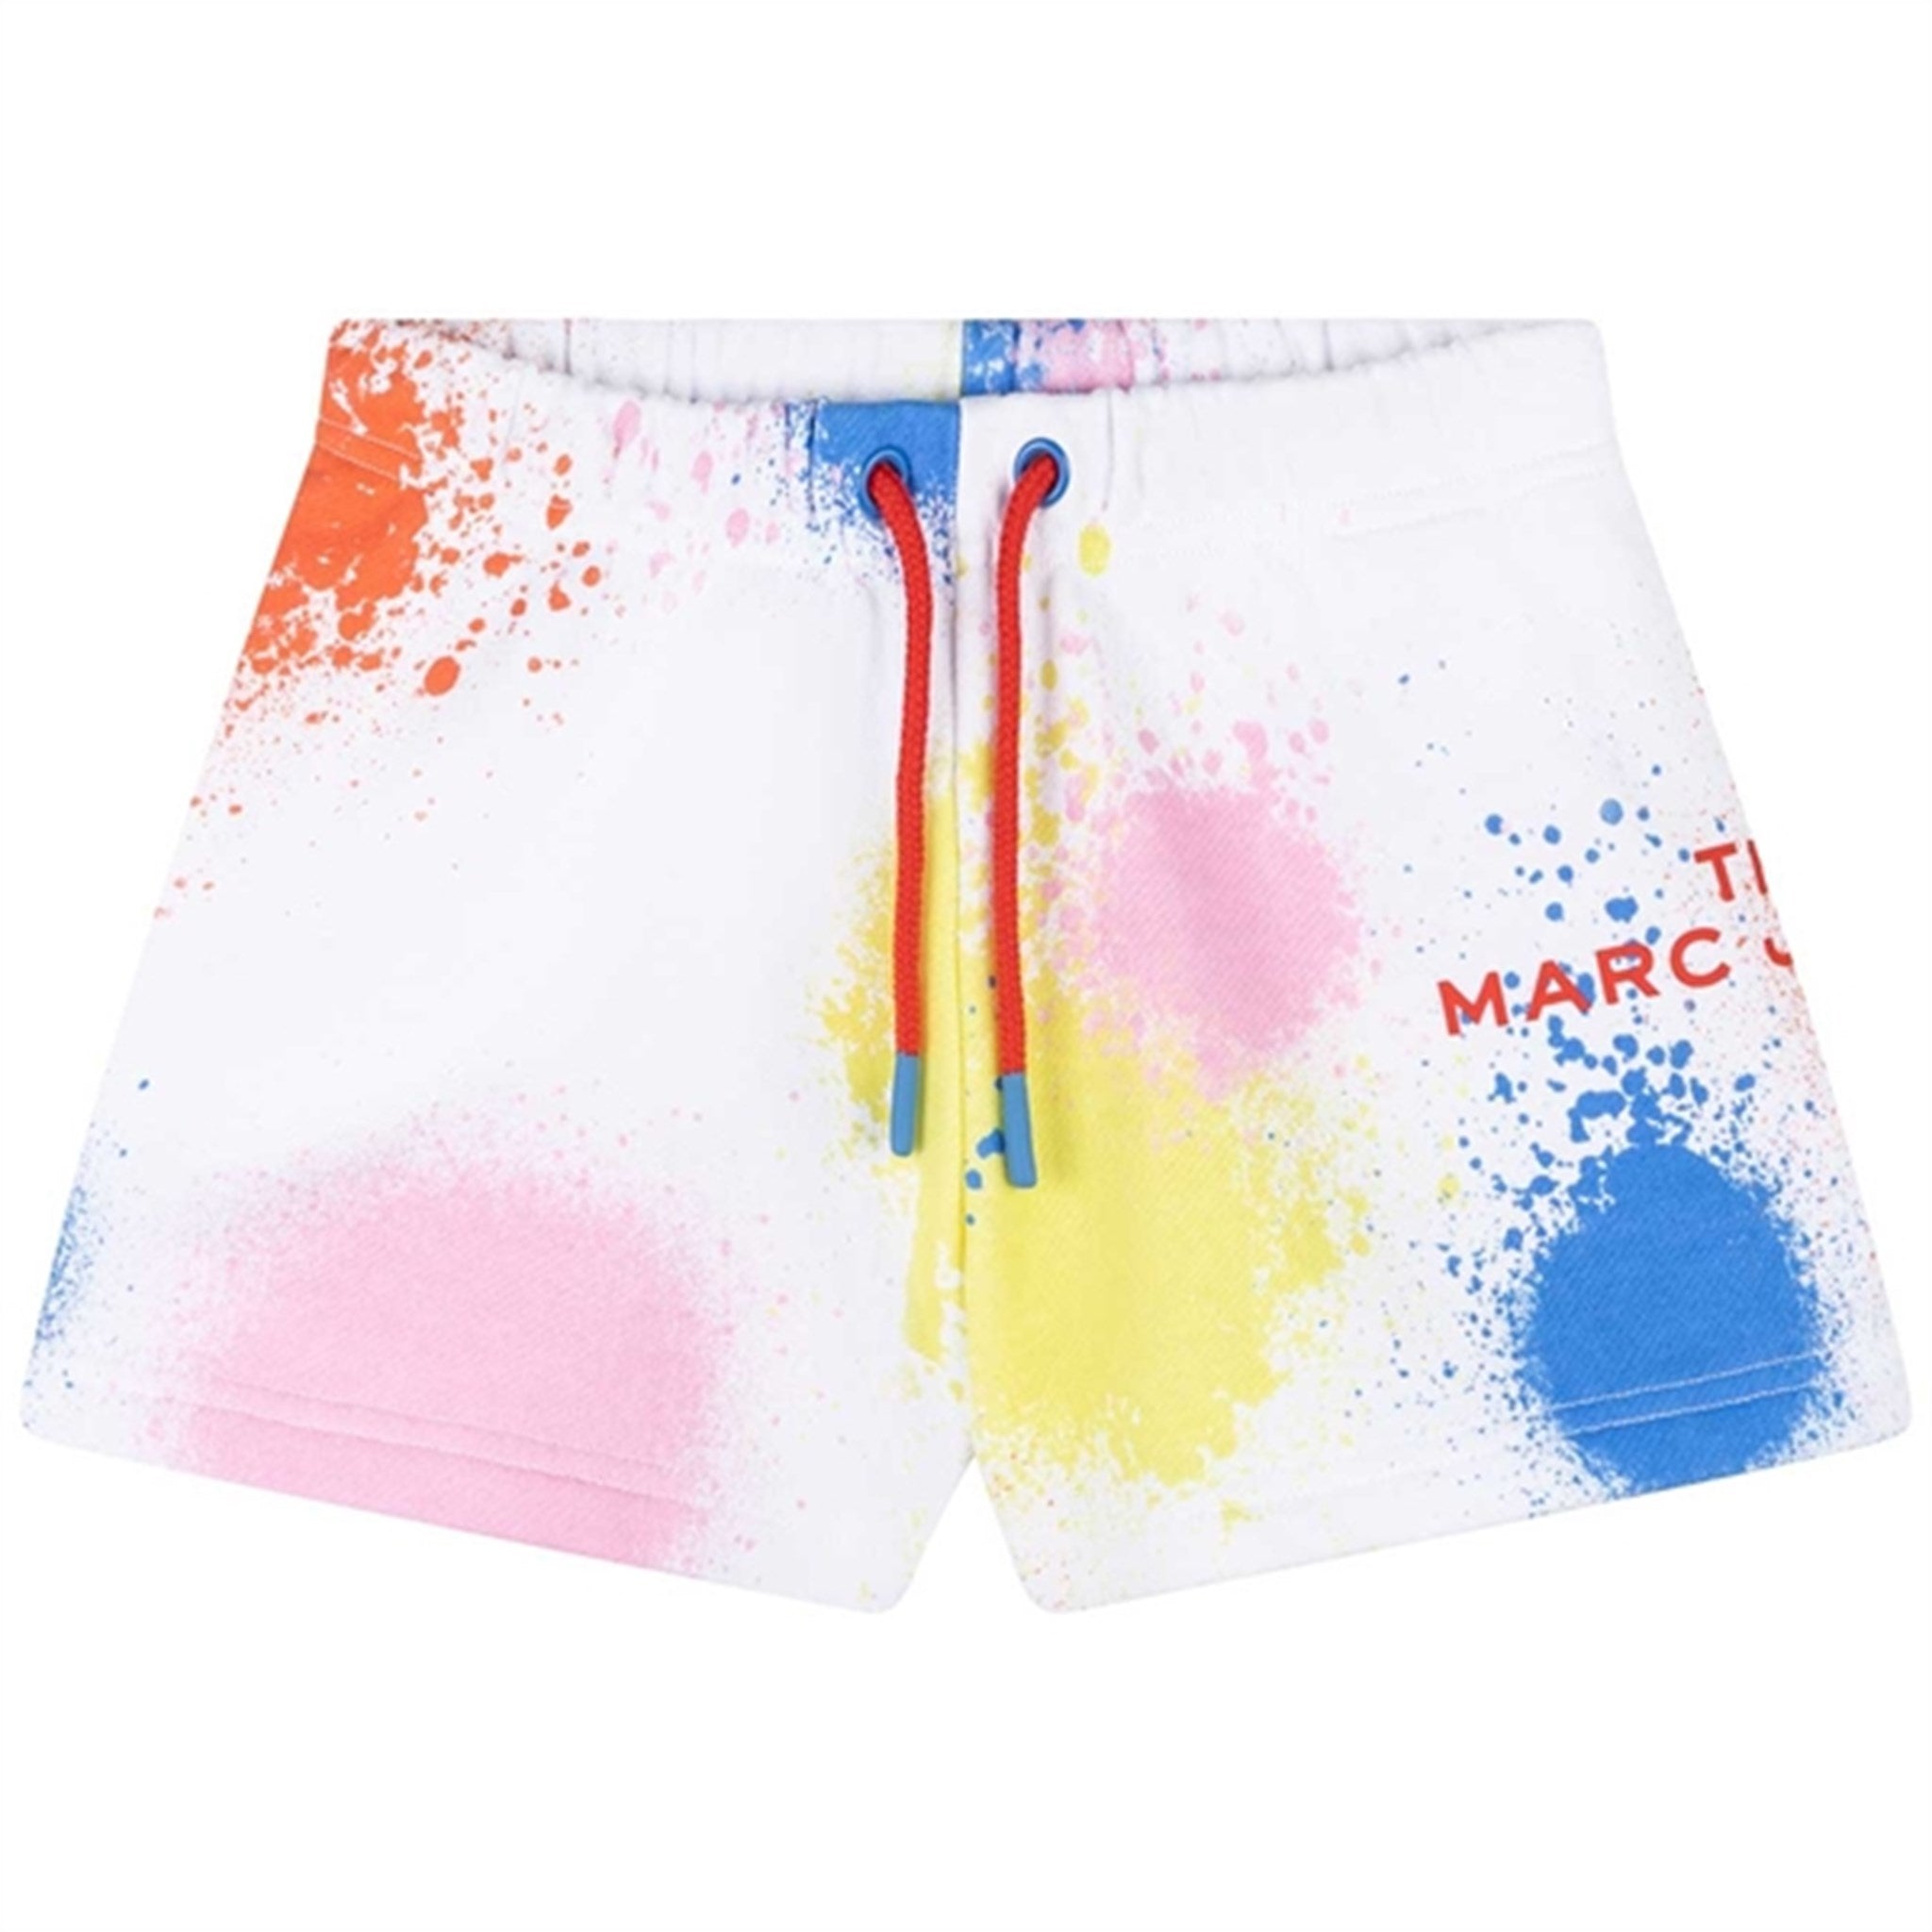 Marc Jacobs Shorts White 5